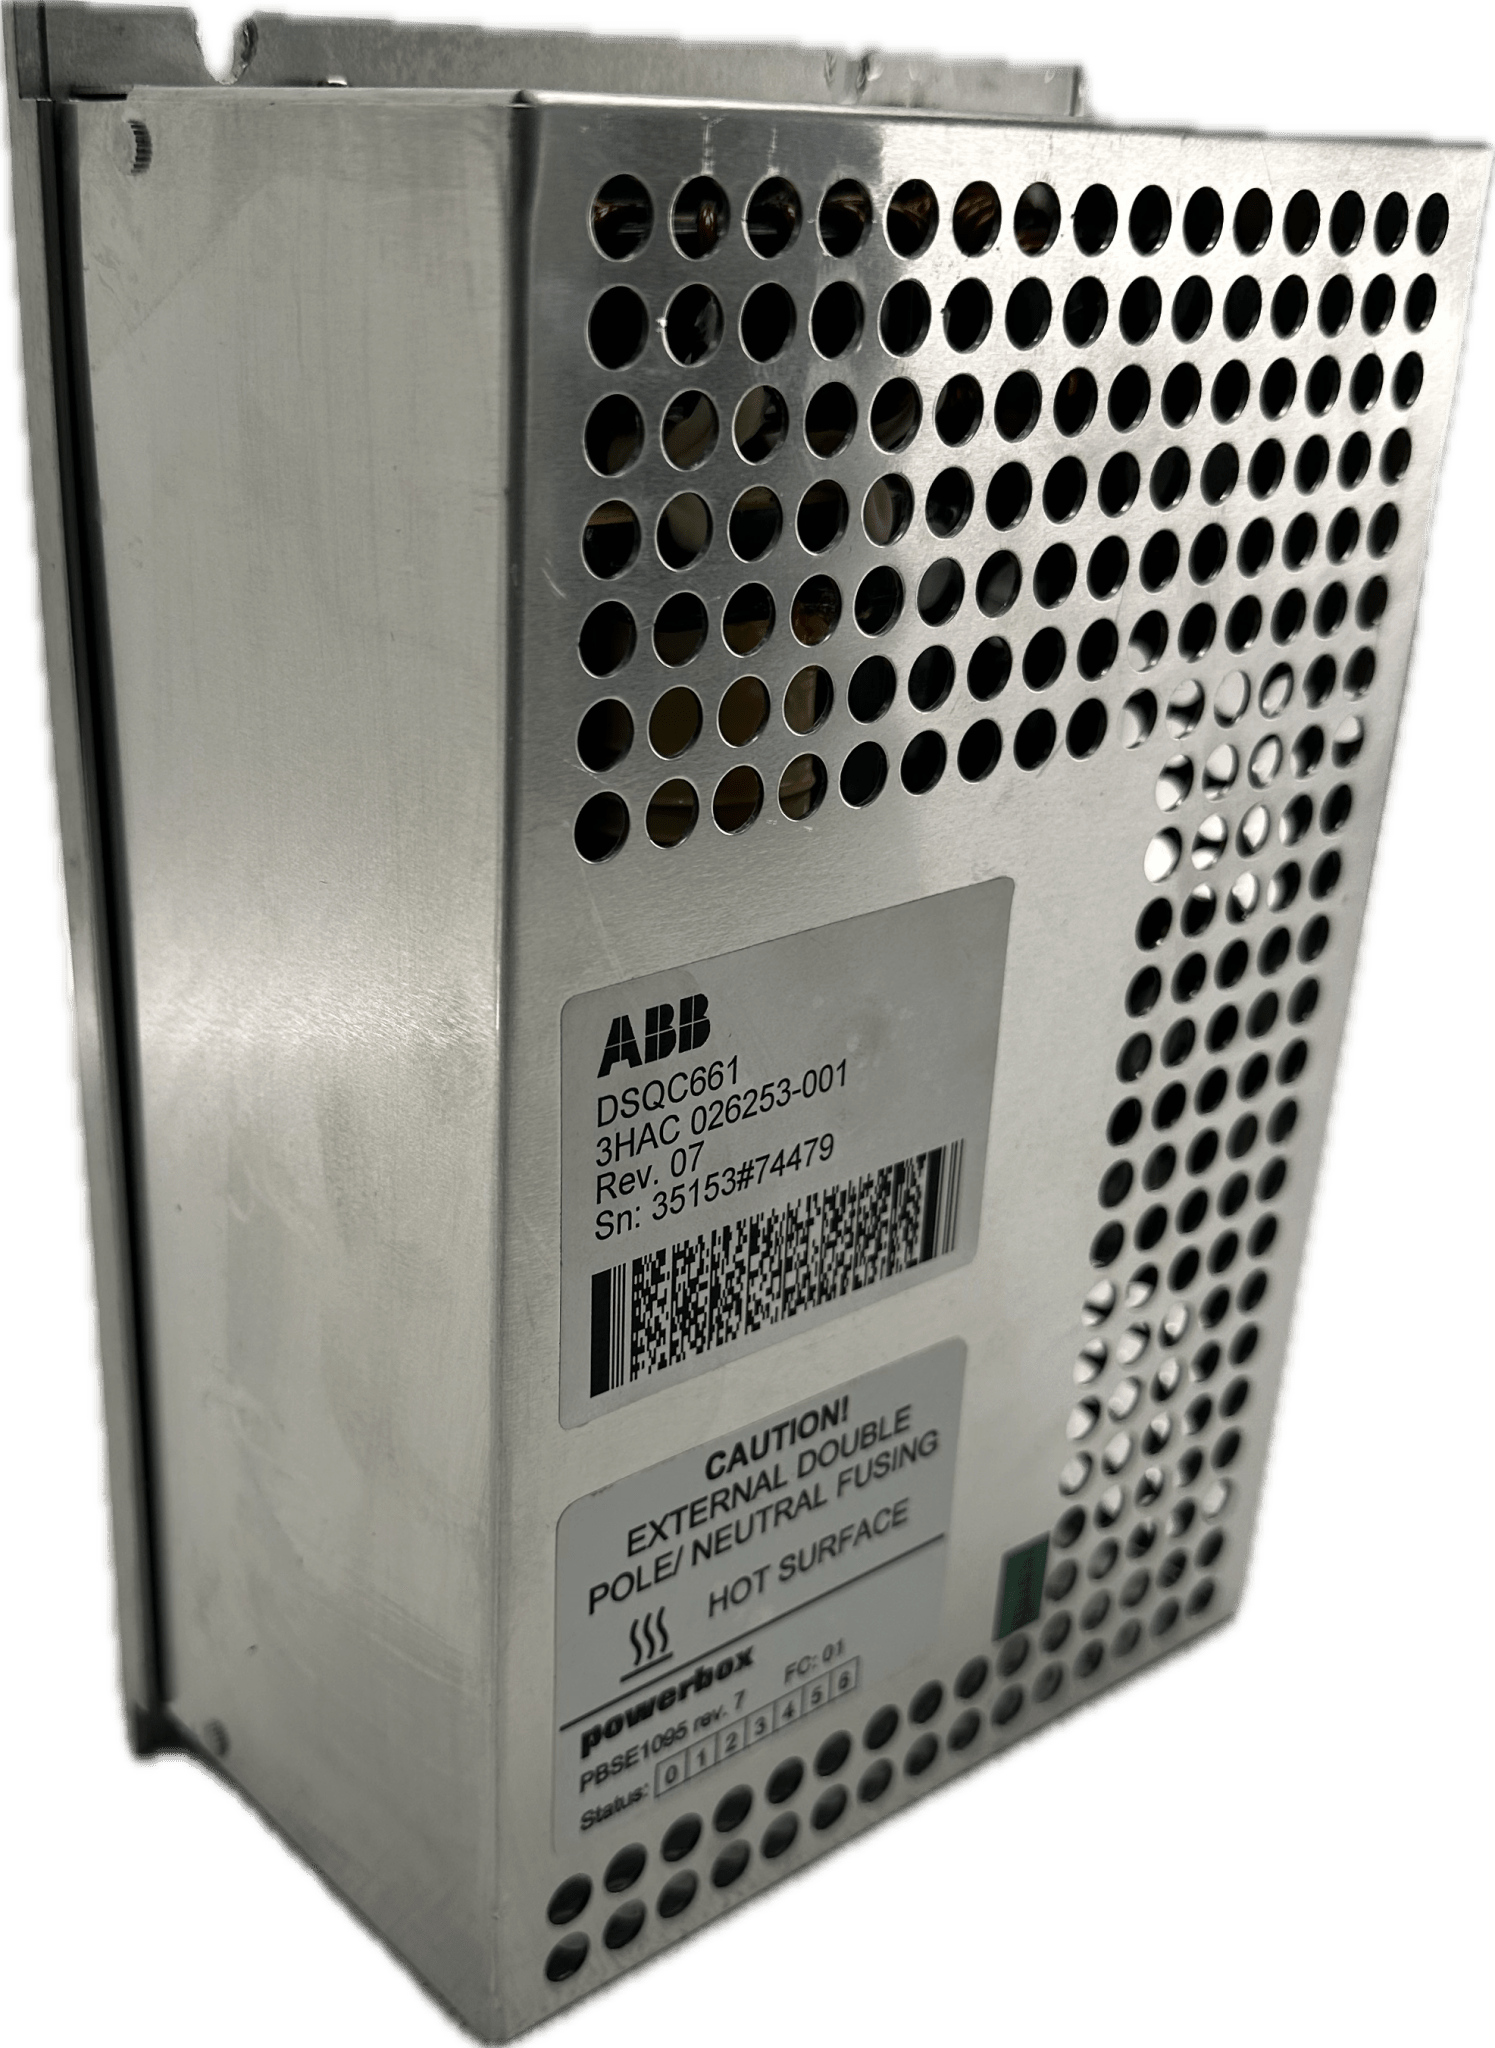 ABB DSQC661 Power Supply 3HAC 026253-001 - #product_category# | Klenk Maschinenhandel